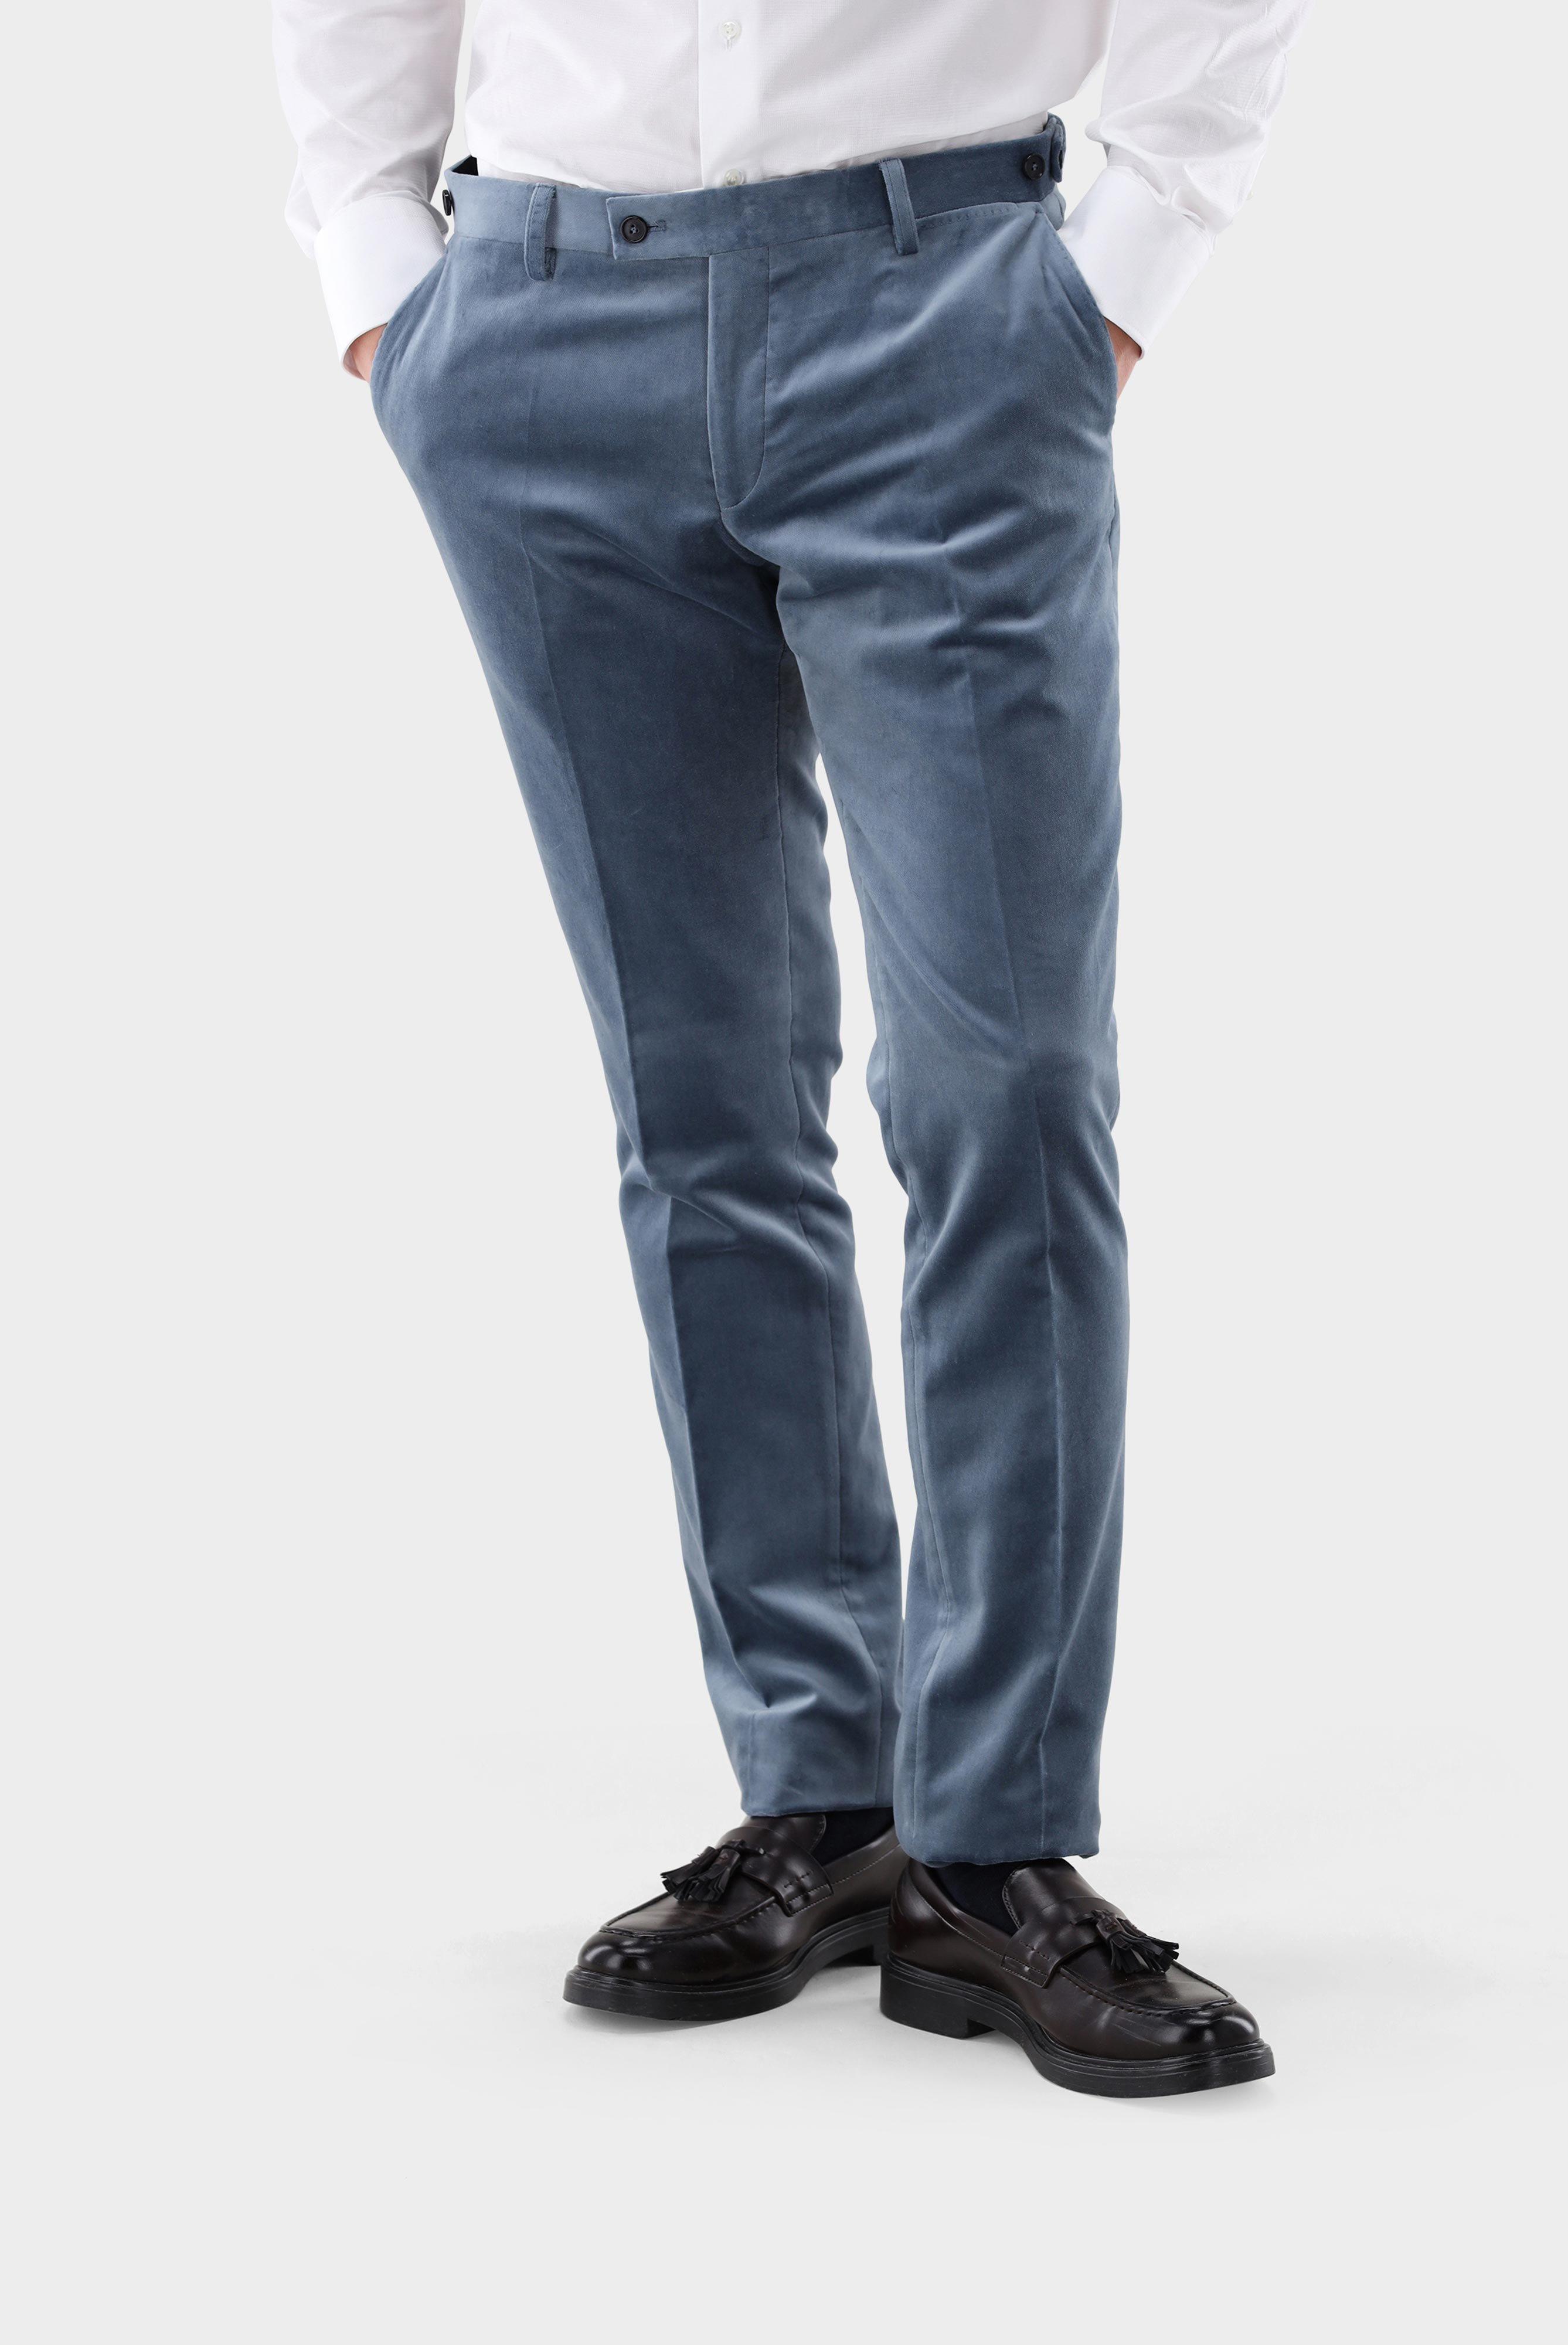 Jeans & Trousers+Cotton Velvet Trousers Slim Fit+20.7854.16.H00847.740.46